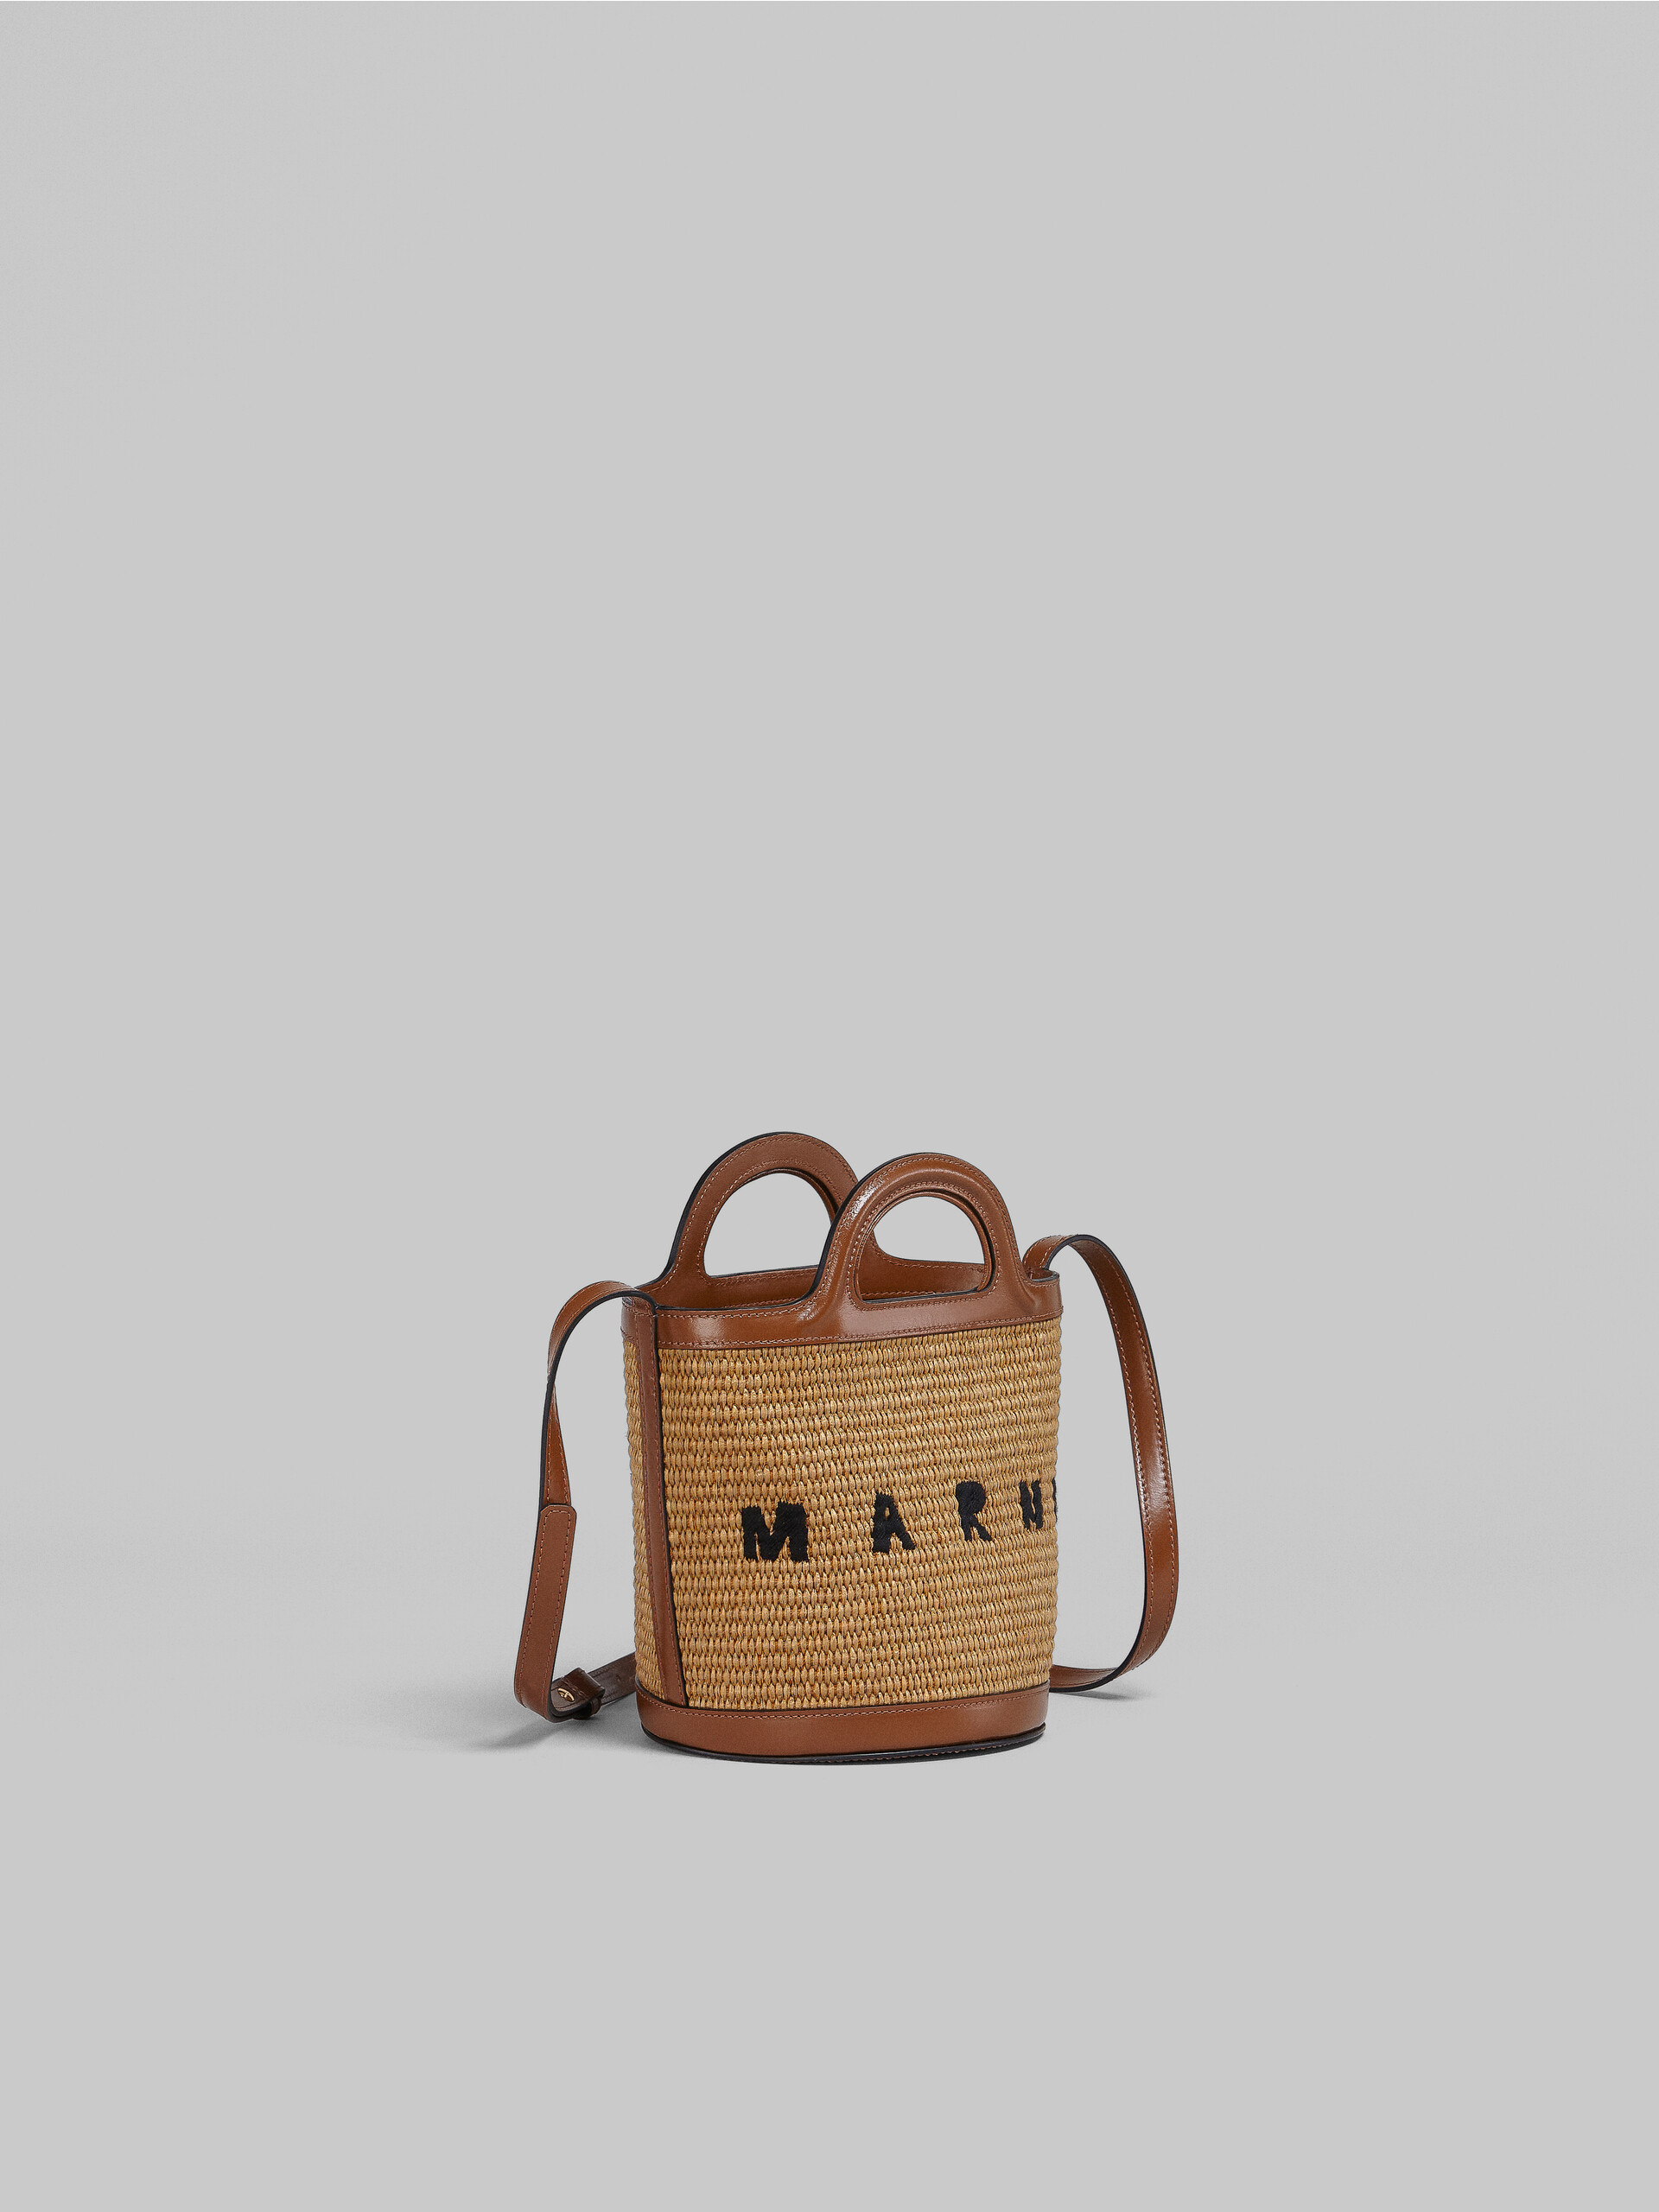 TROPICALIA mini bucket bag in brown leather and raffia